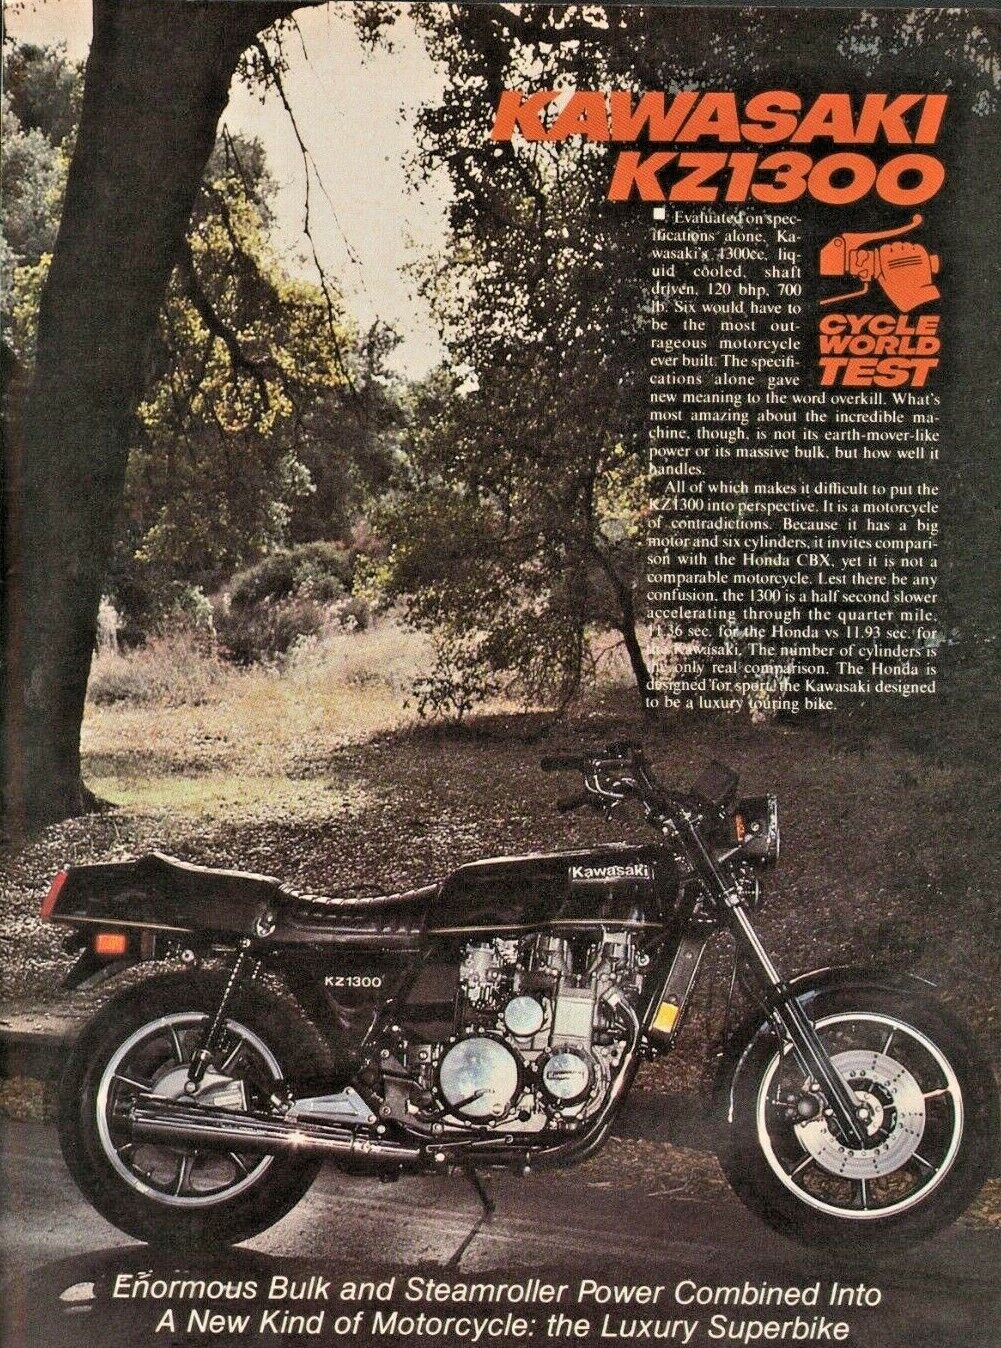 1979 Kawasaki KZ1300 - 8-Page Vintage Motorcycle Road Test Article